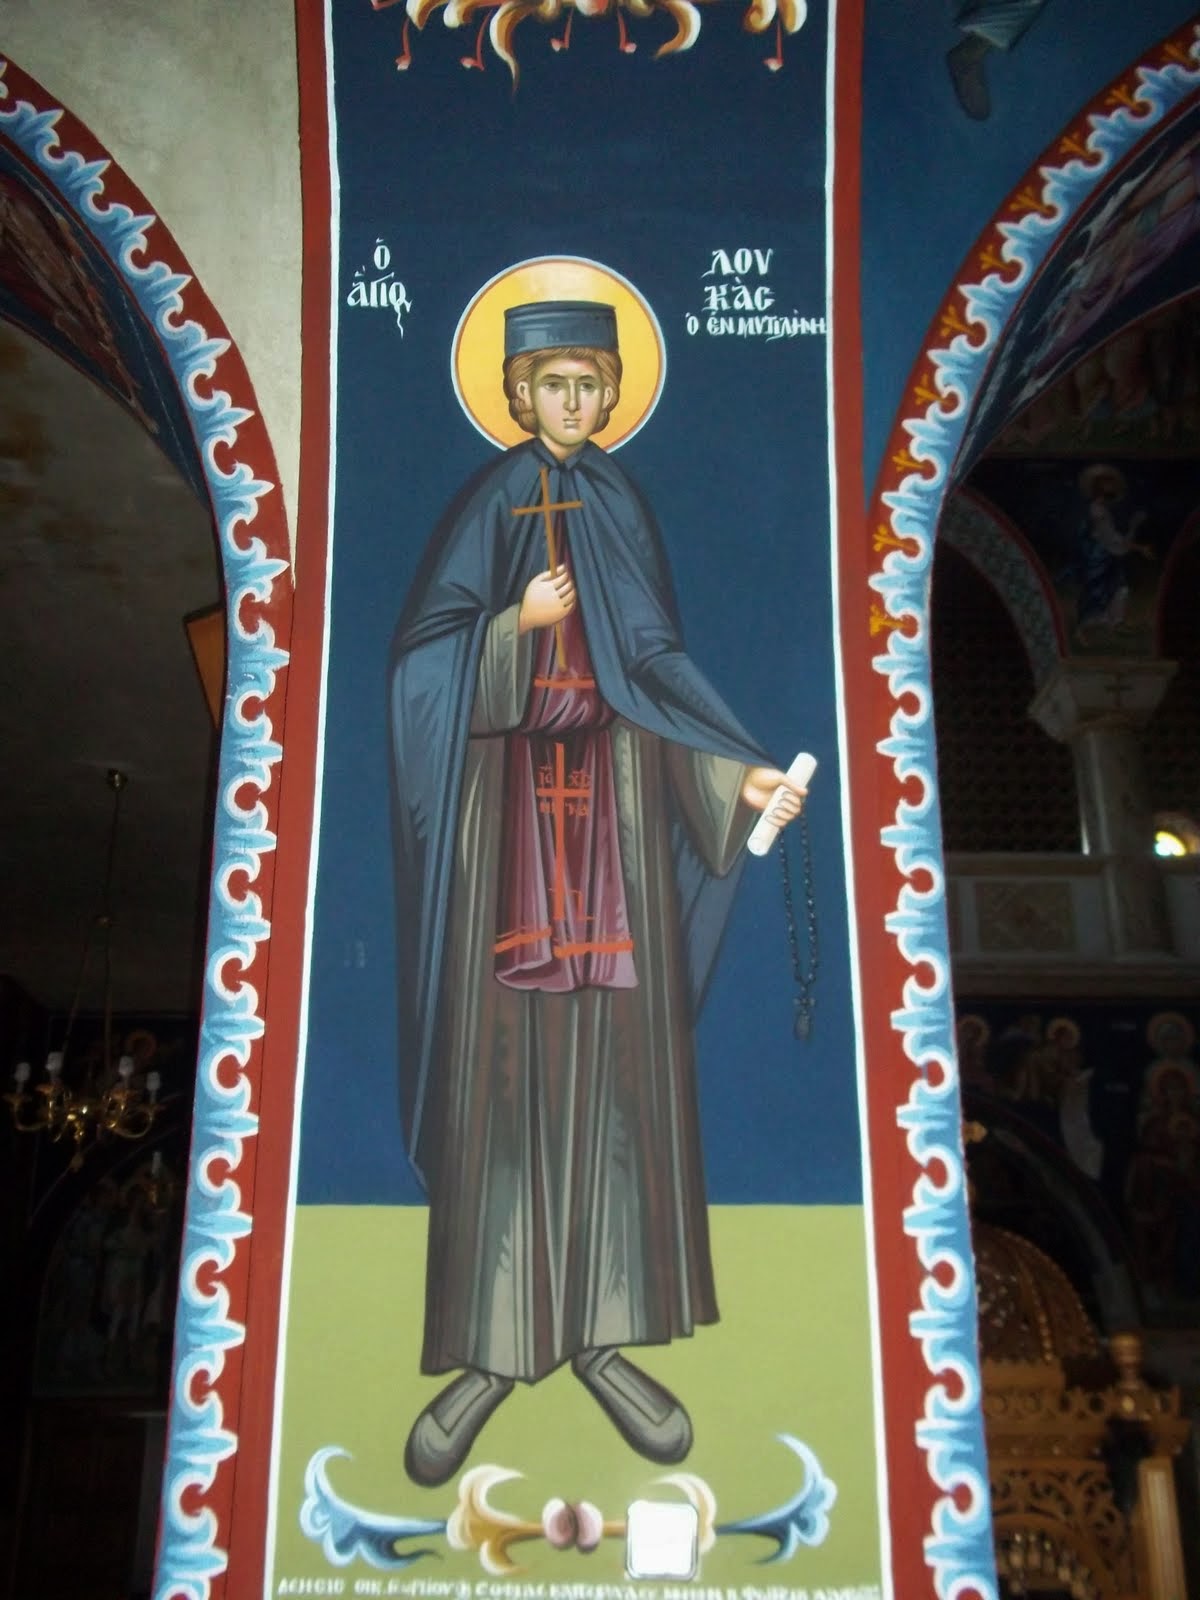 Saint_Loukas of-Odrin-Adrianople-icon